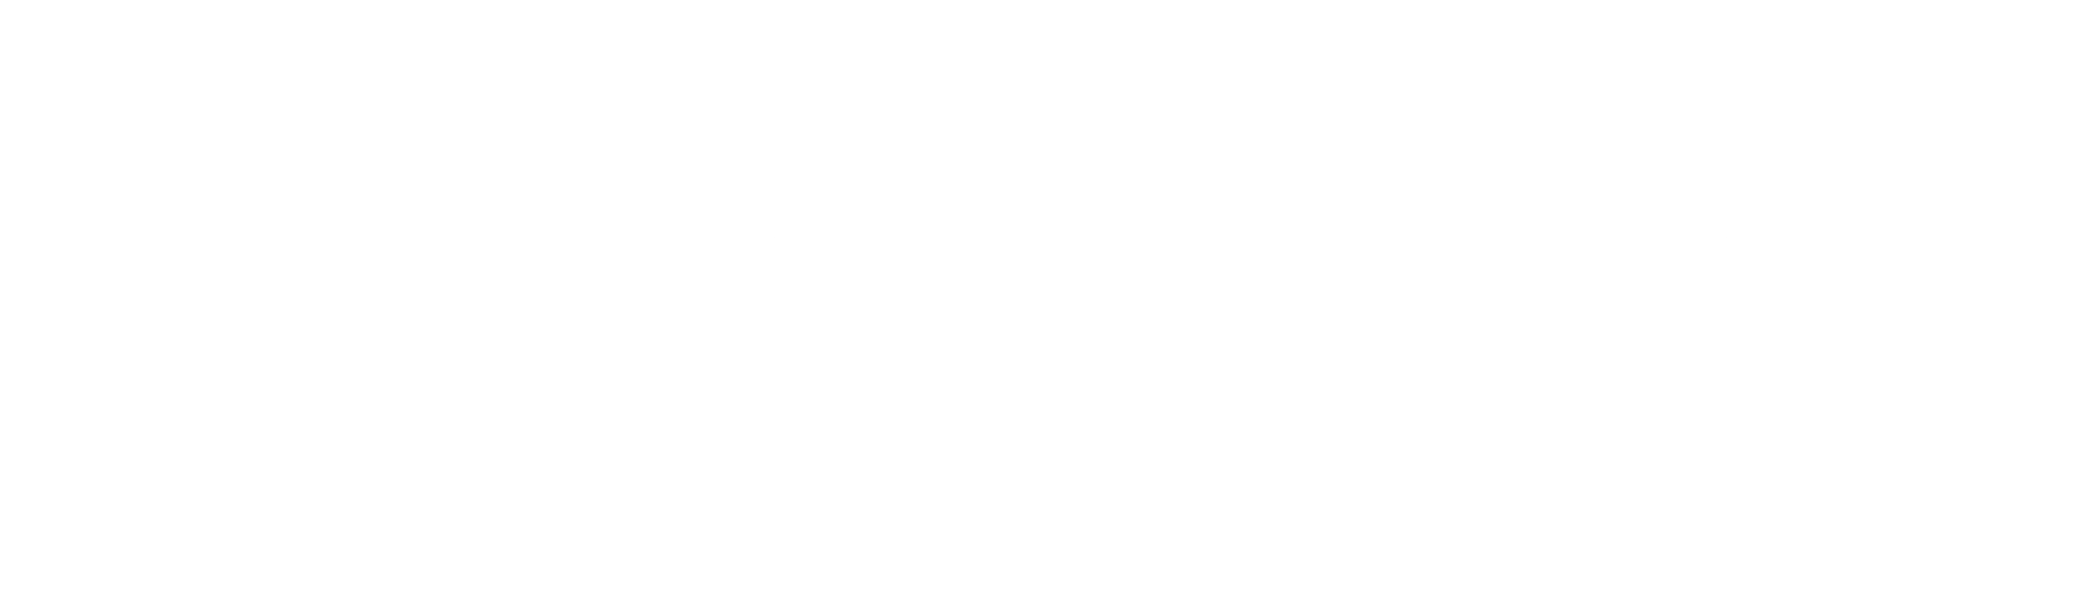 2020.02.11 Stage 2 Logo - White - Final